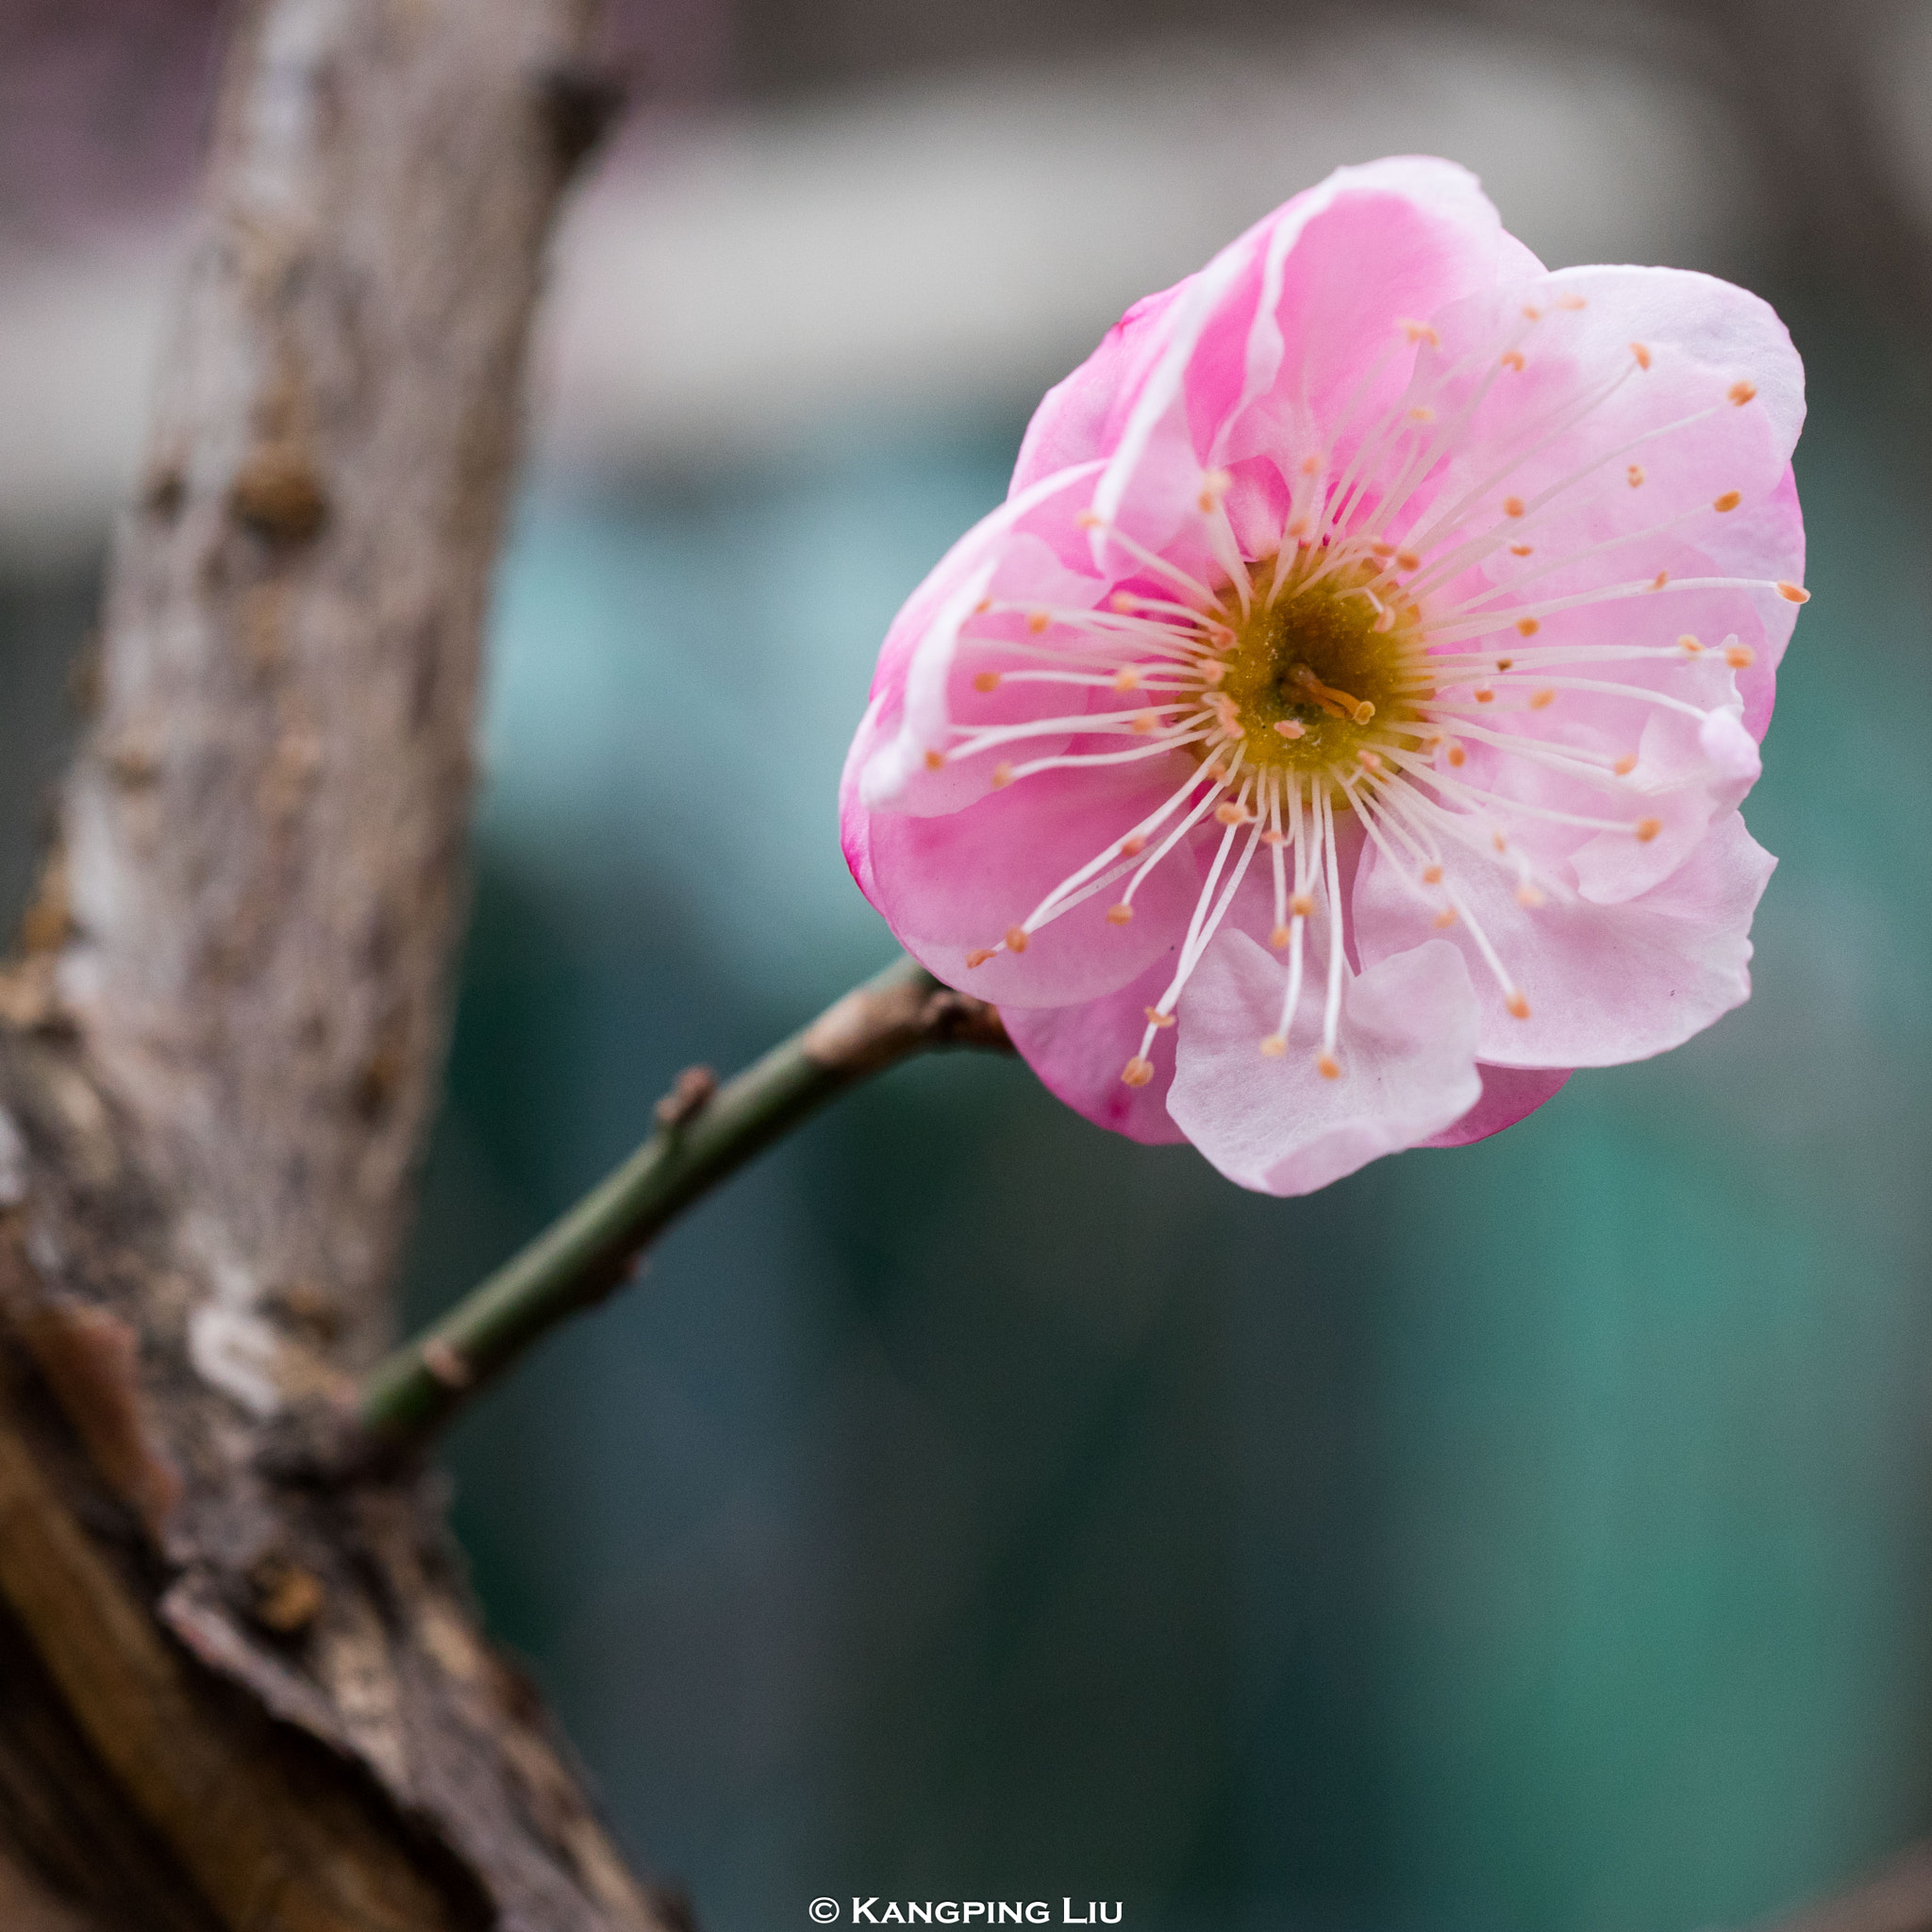 Sony a7 sample photo. Pluｍ blossom #2 photography